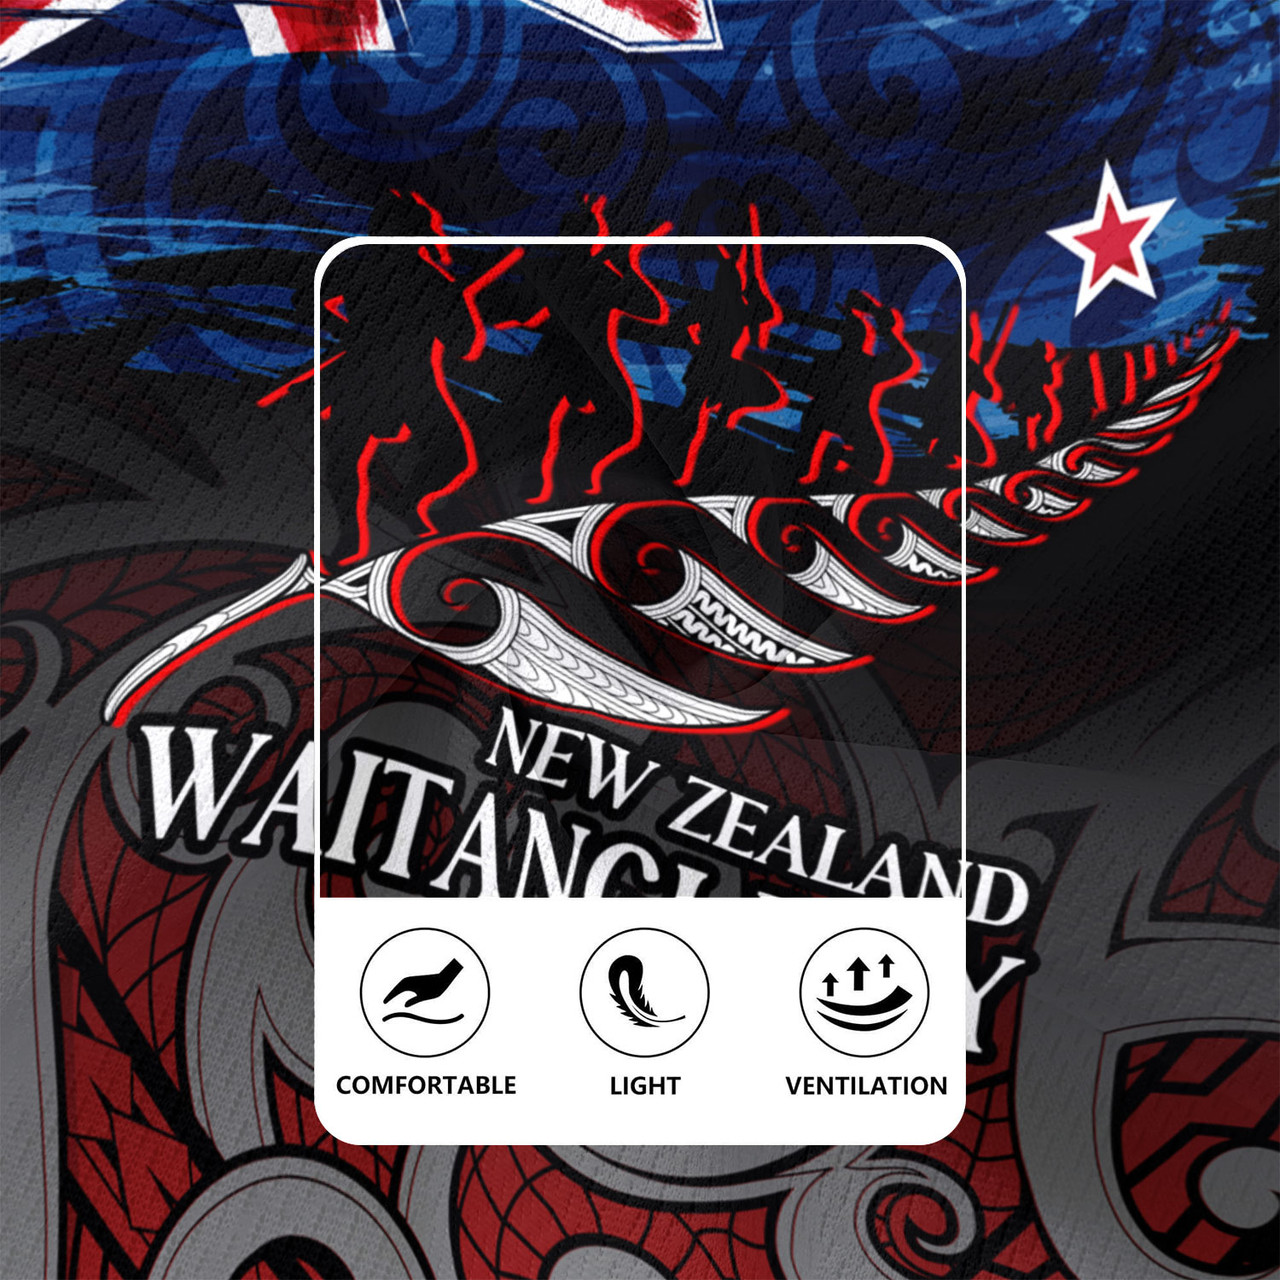 New Zealand Custom Personalised Rugby Jersey Waitangi Day Maori Patterns